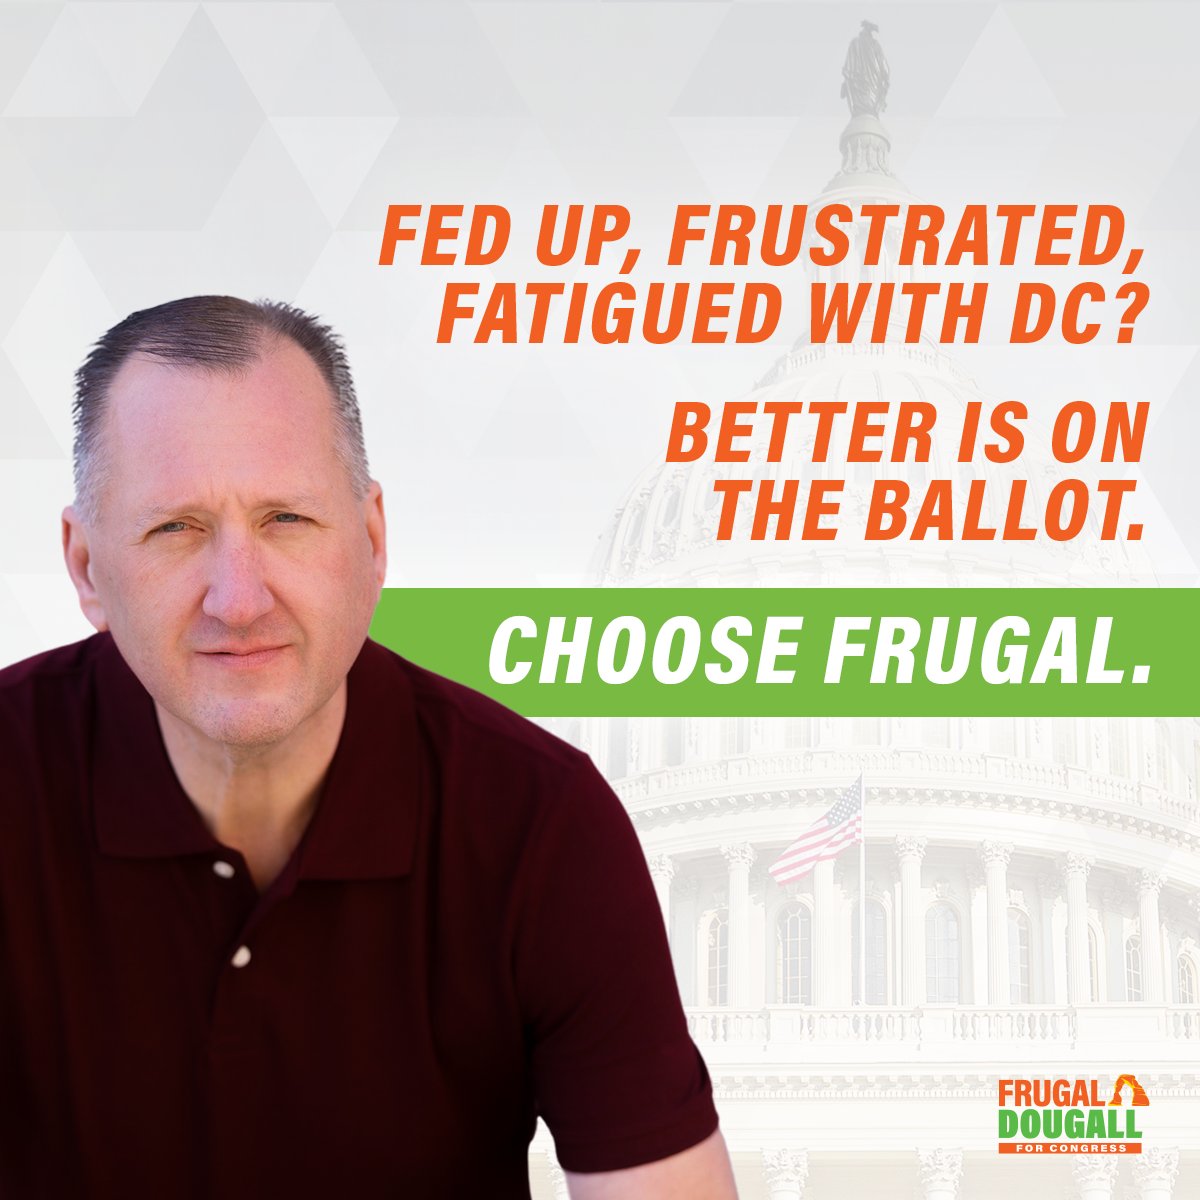 #VoteFrugal #FrugalDougall4Congress #ChooseFrugal #ChooseBetter